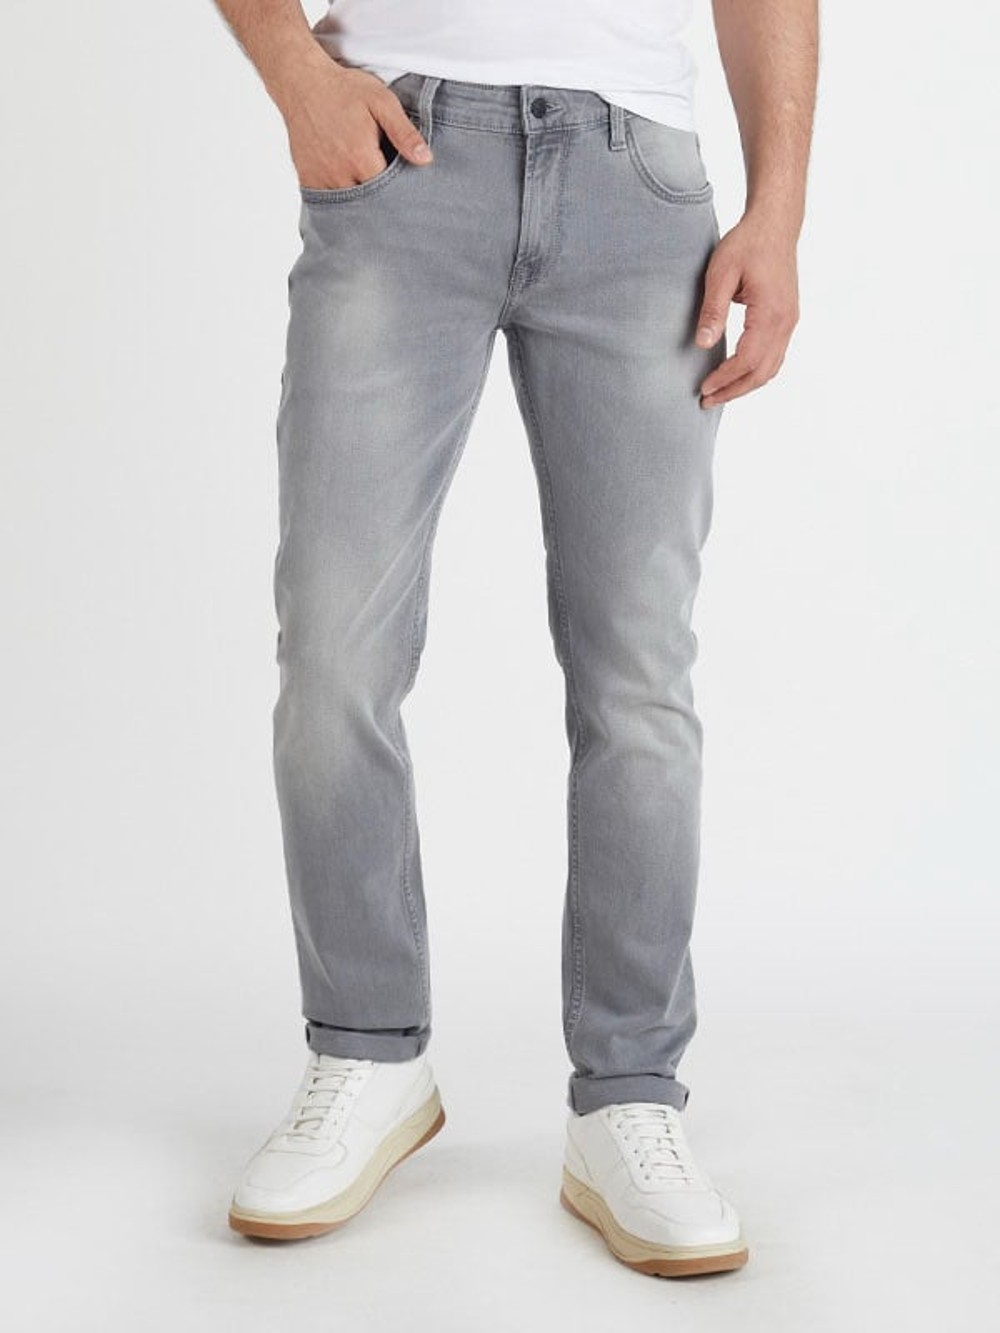 Buy Men Trenton Fit Stretchable Jeans | Indian